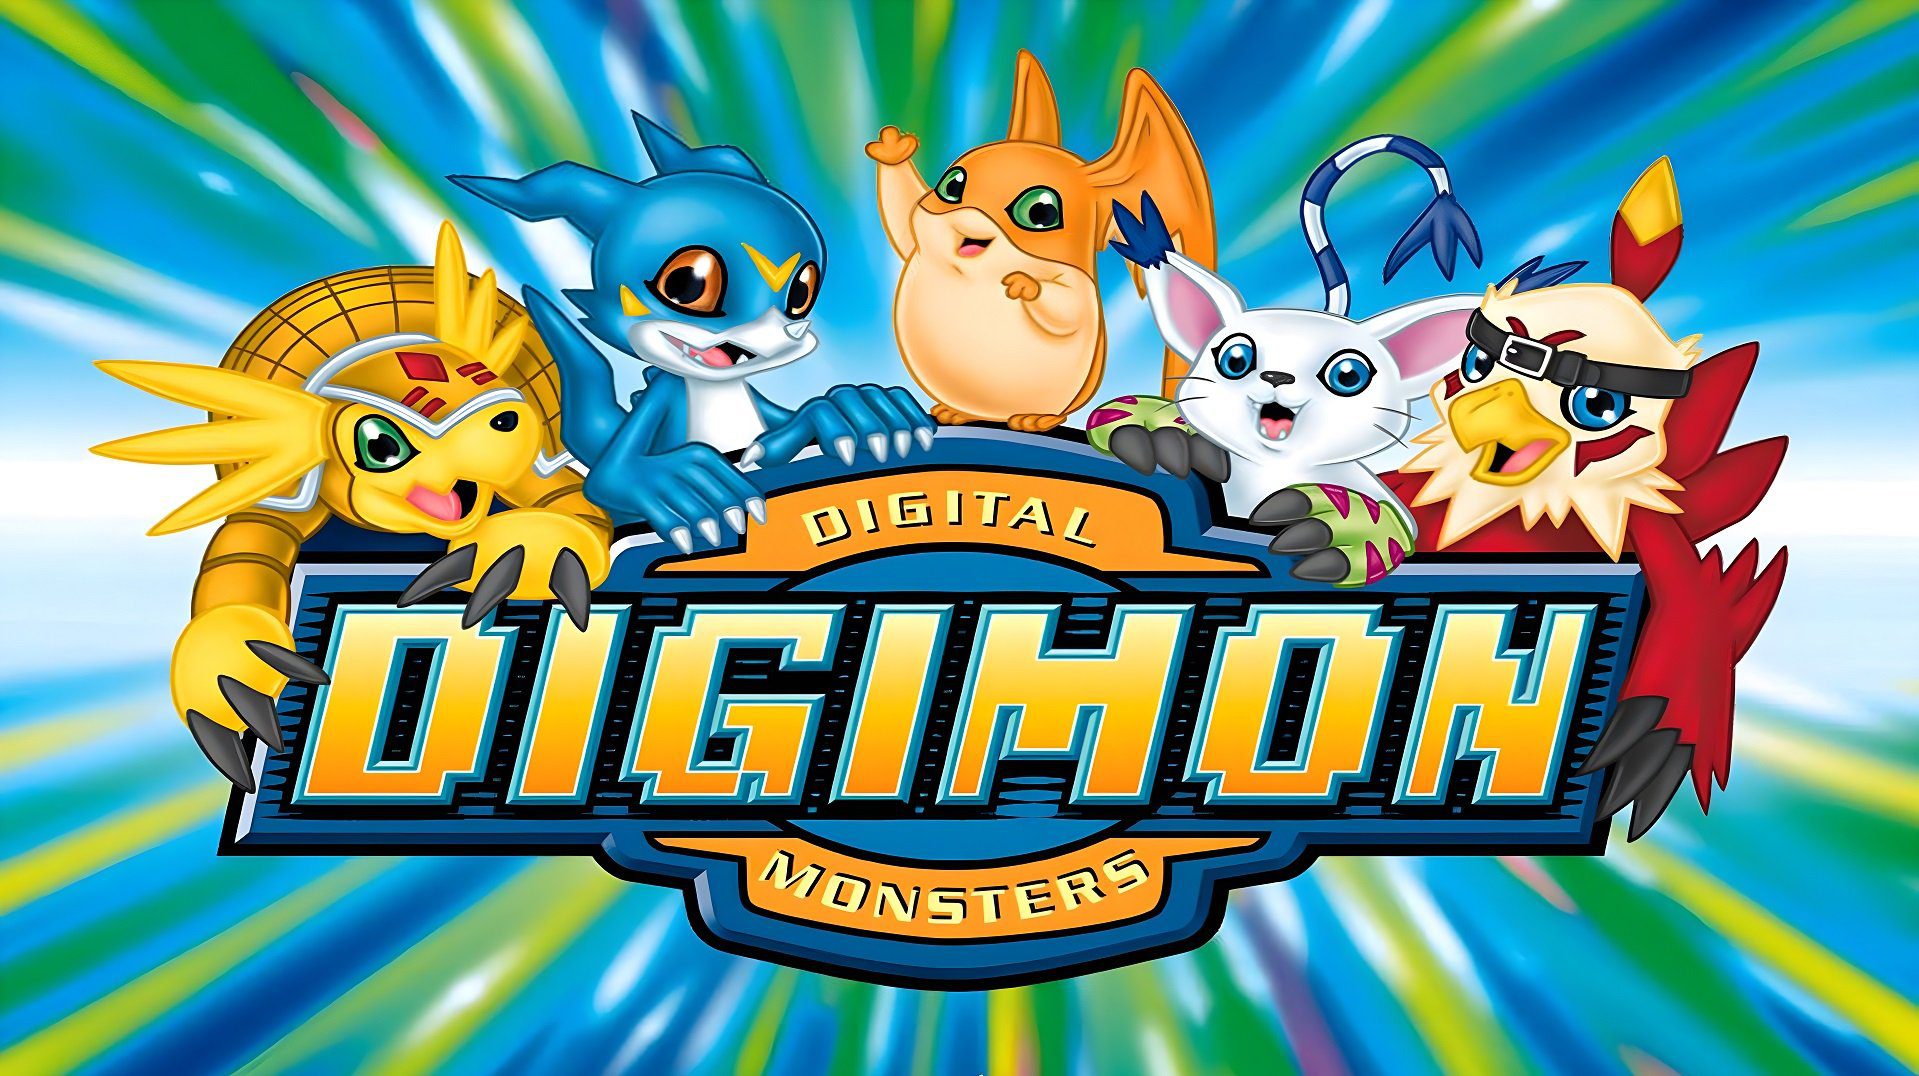 Digimon Top 5 games